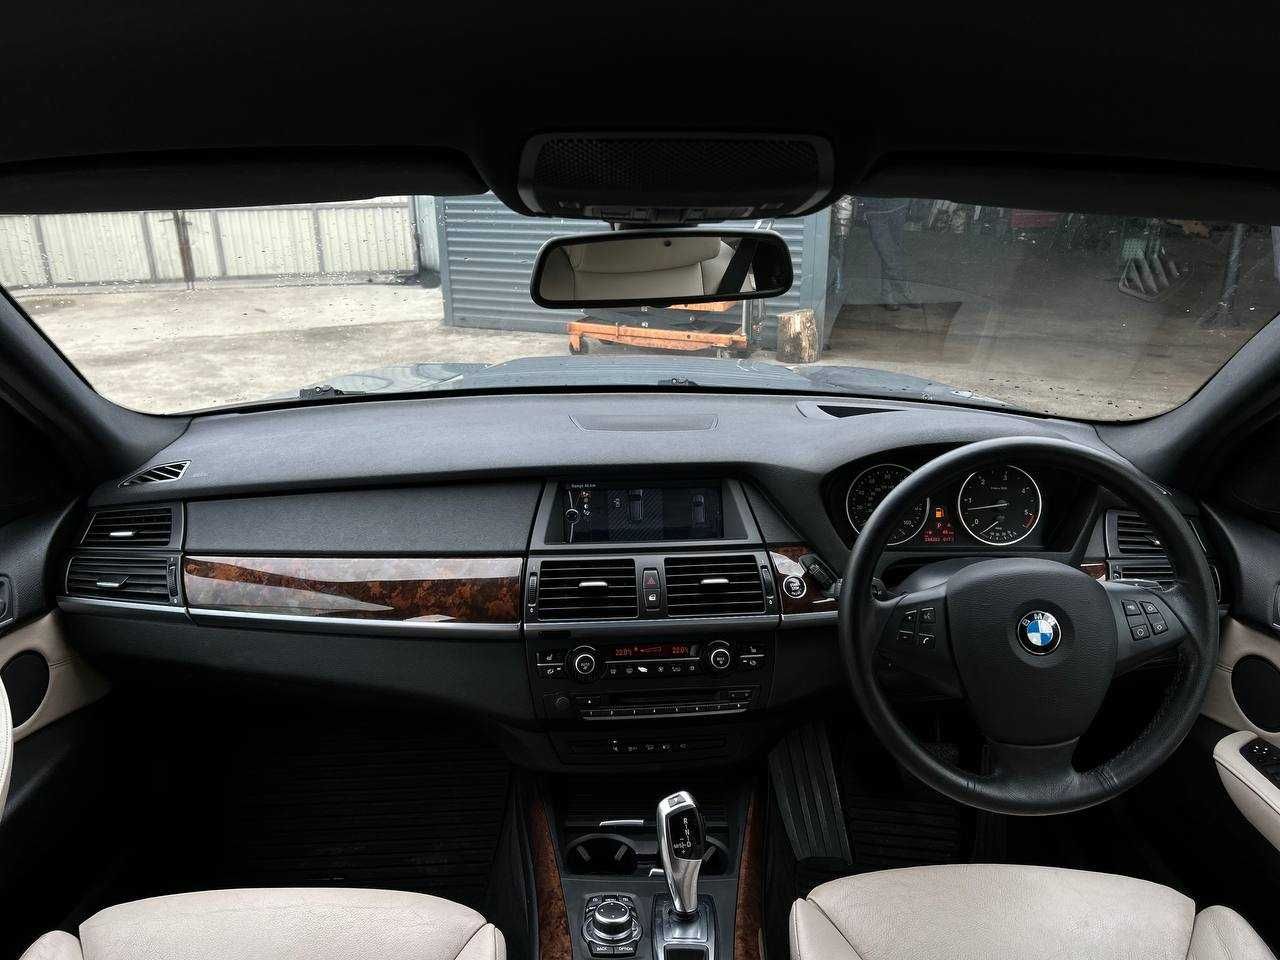 BMW X5 E70 Разборка бмв е70 Розбірка bmw e 70 Розборка фари капот АКПП